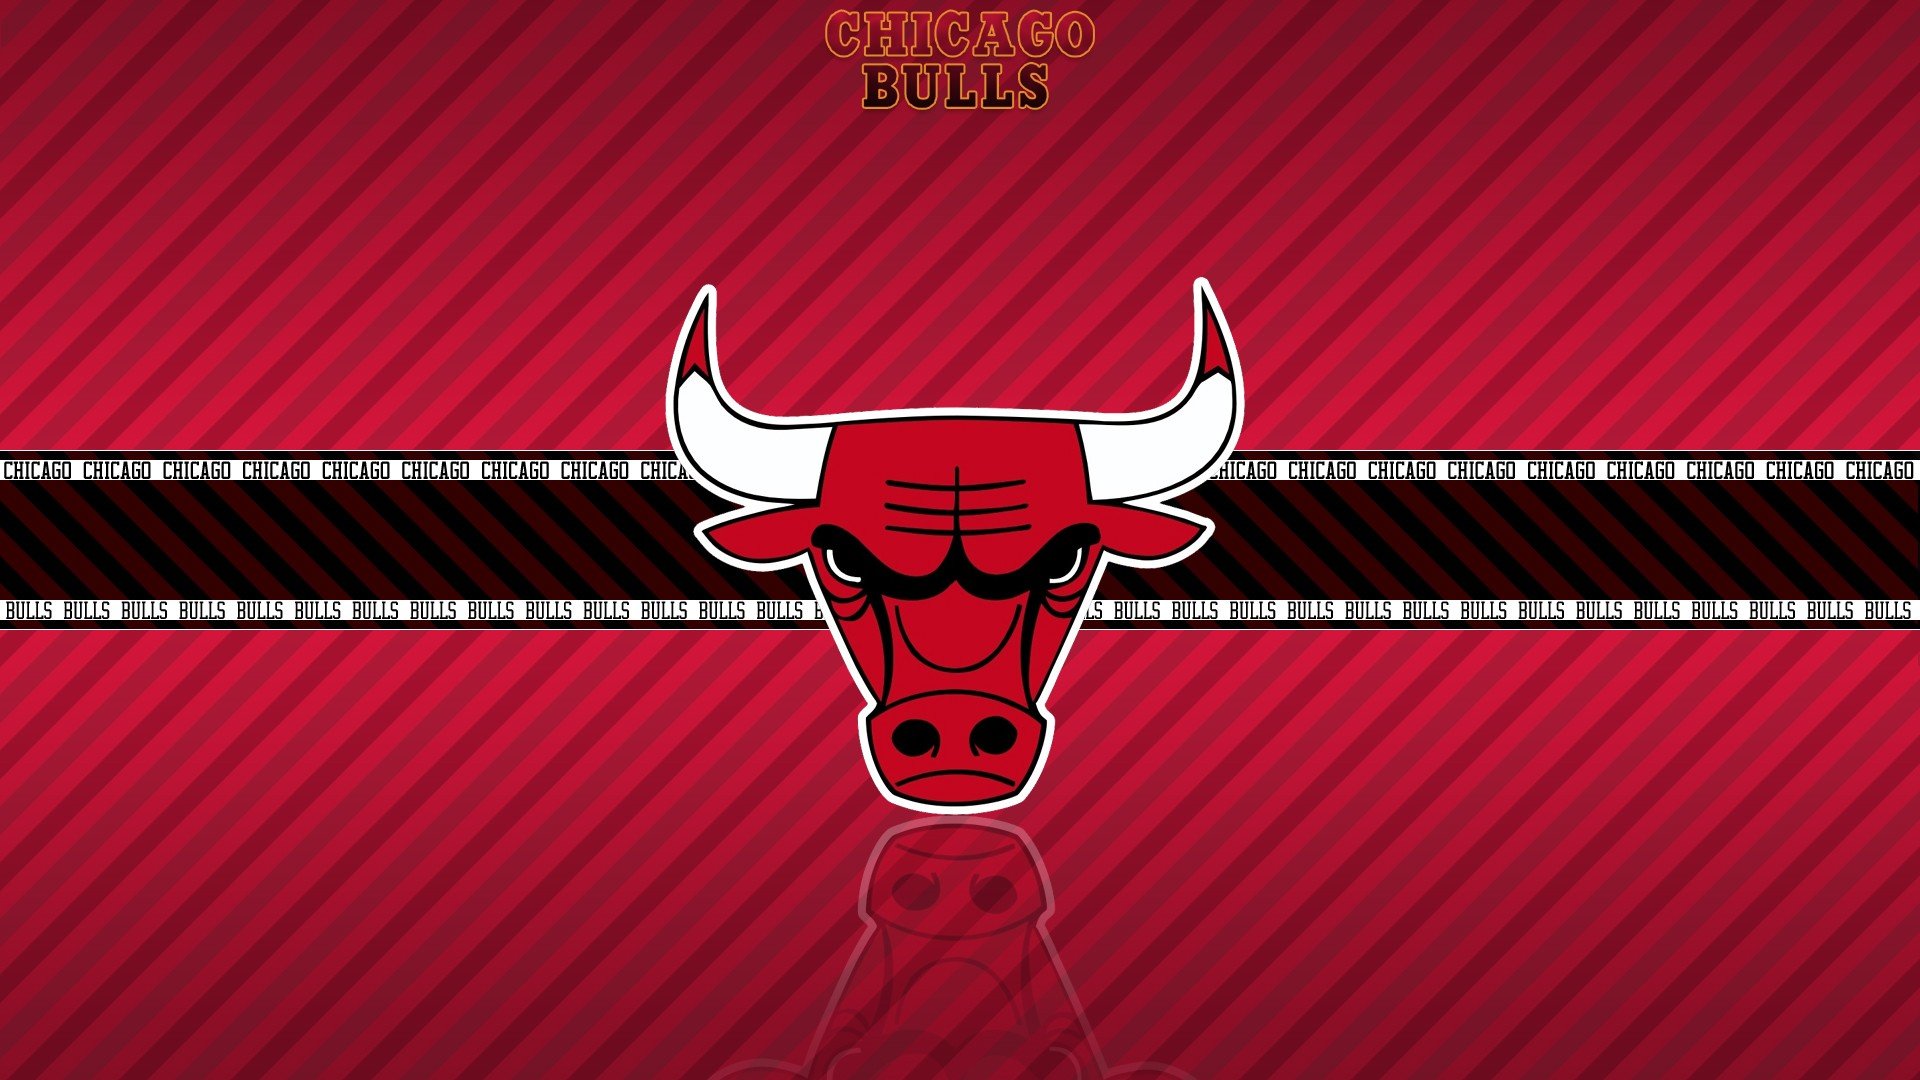 Chicago Bulls Wallpapers Hd For Desktop Backgrounds